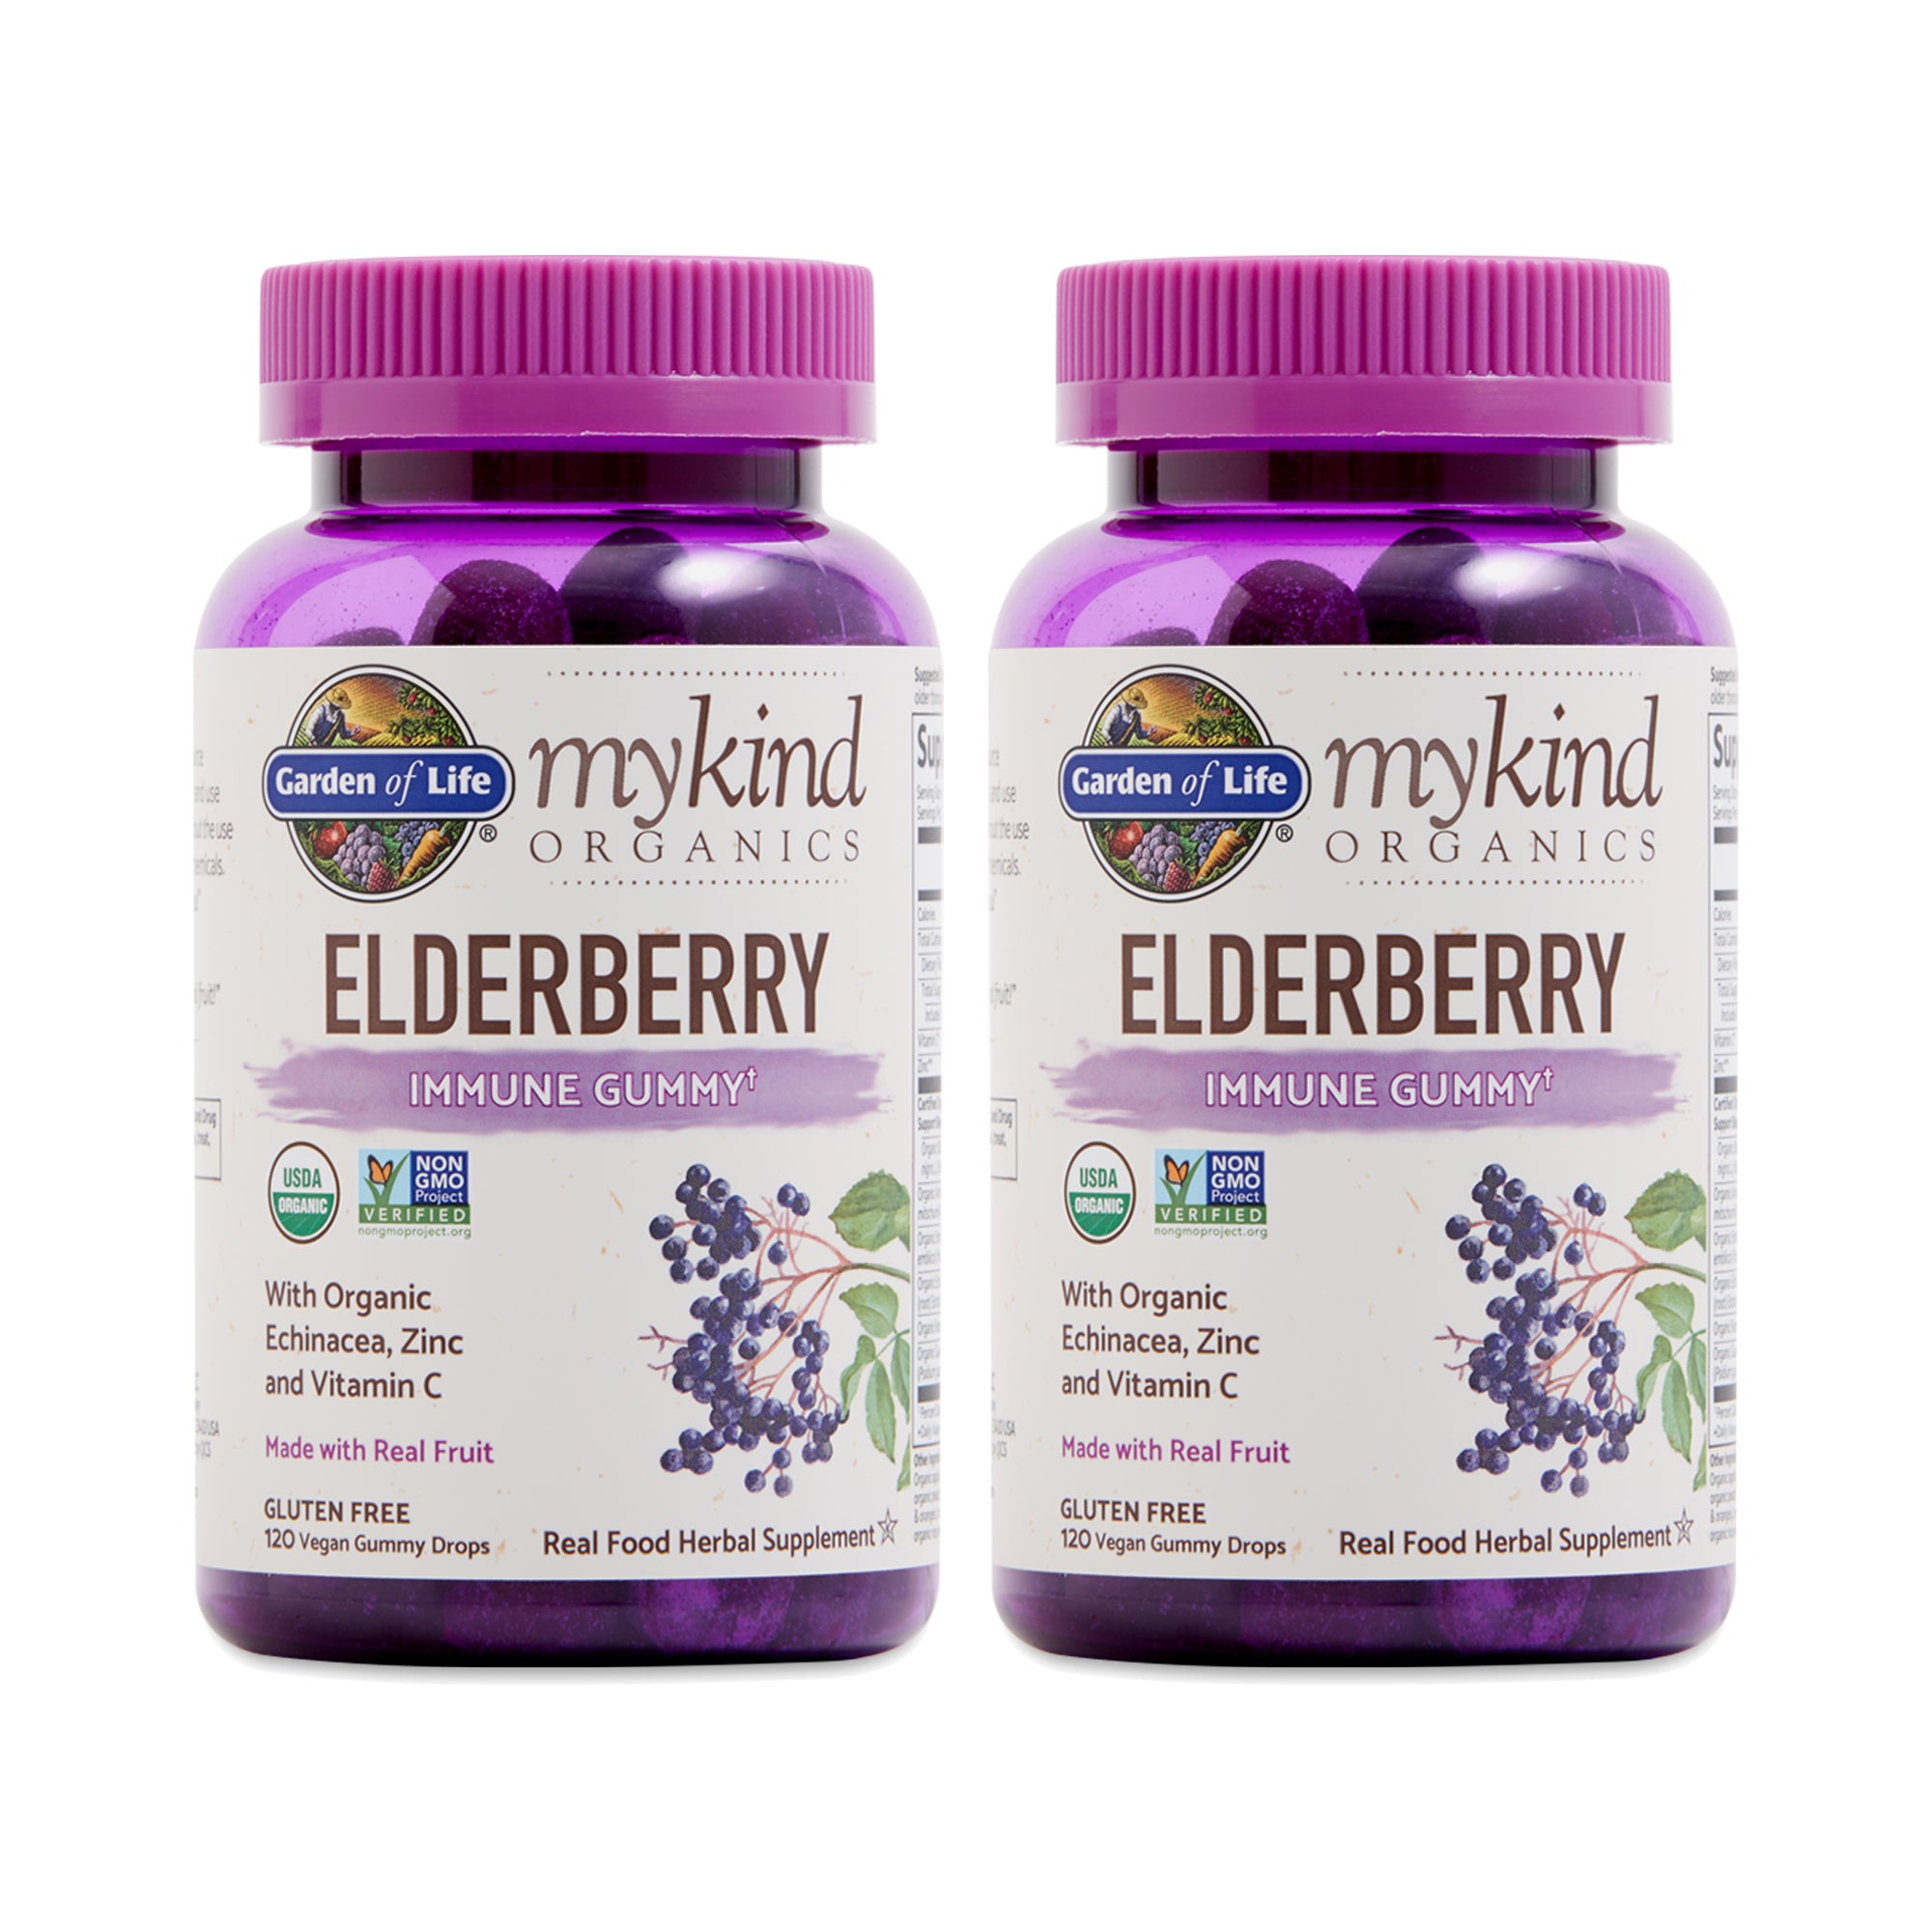 Garden of Life Mykind Organics Elderberry Plant Based Immune Gummy – 120 Real Fruit Gummies For Kids & Adults – Echinacea, Zinc & Vitamin C, No Added Sugar Herbal Supplements